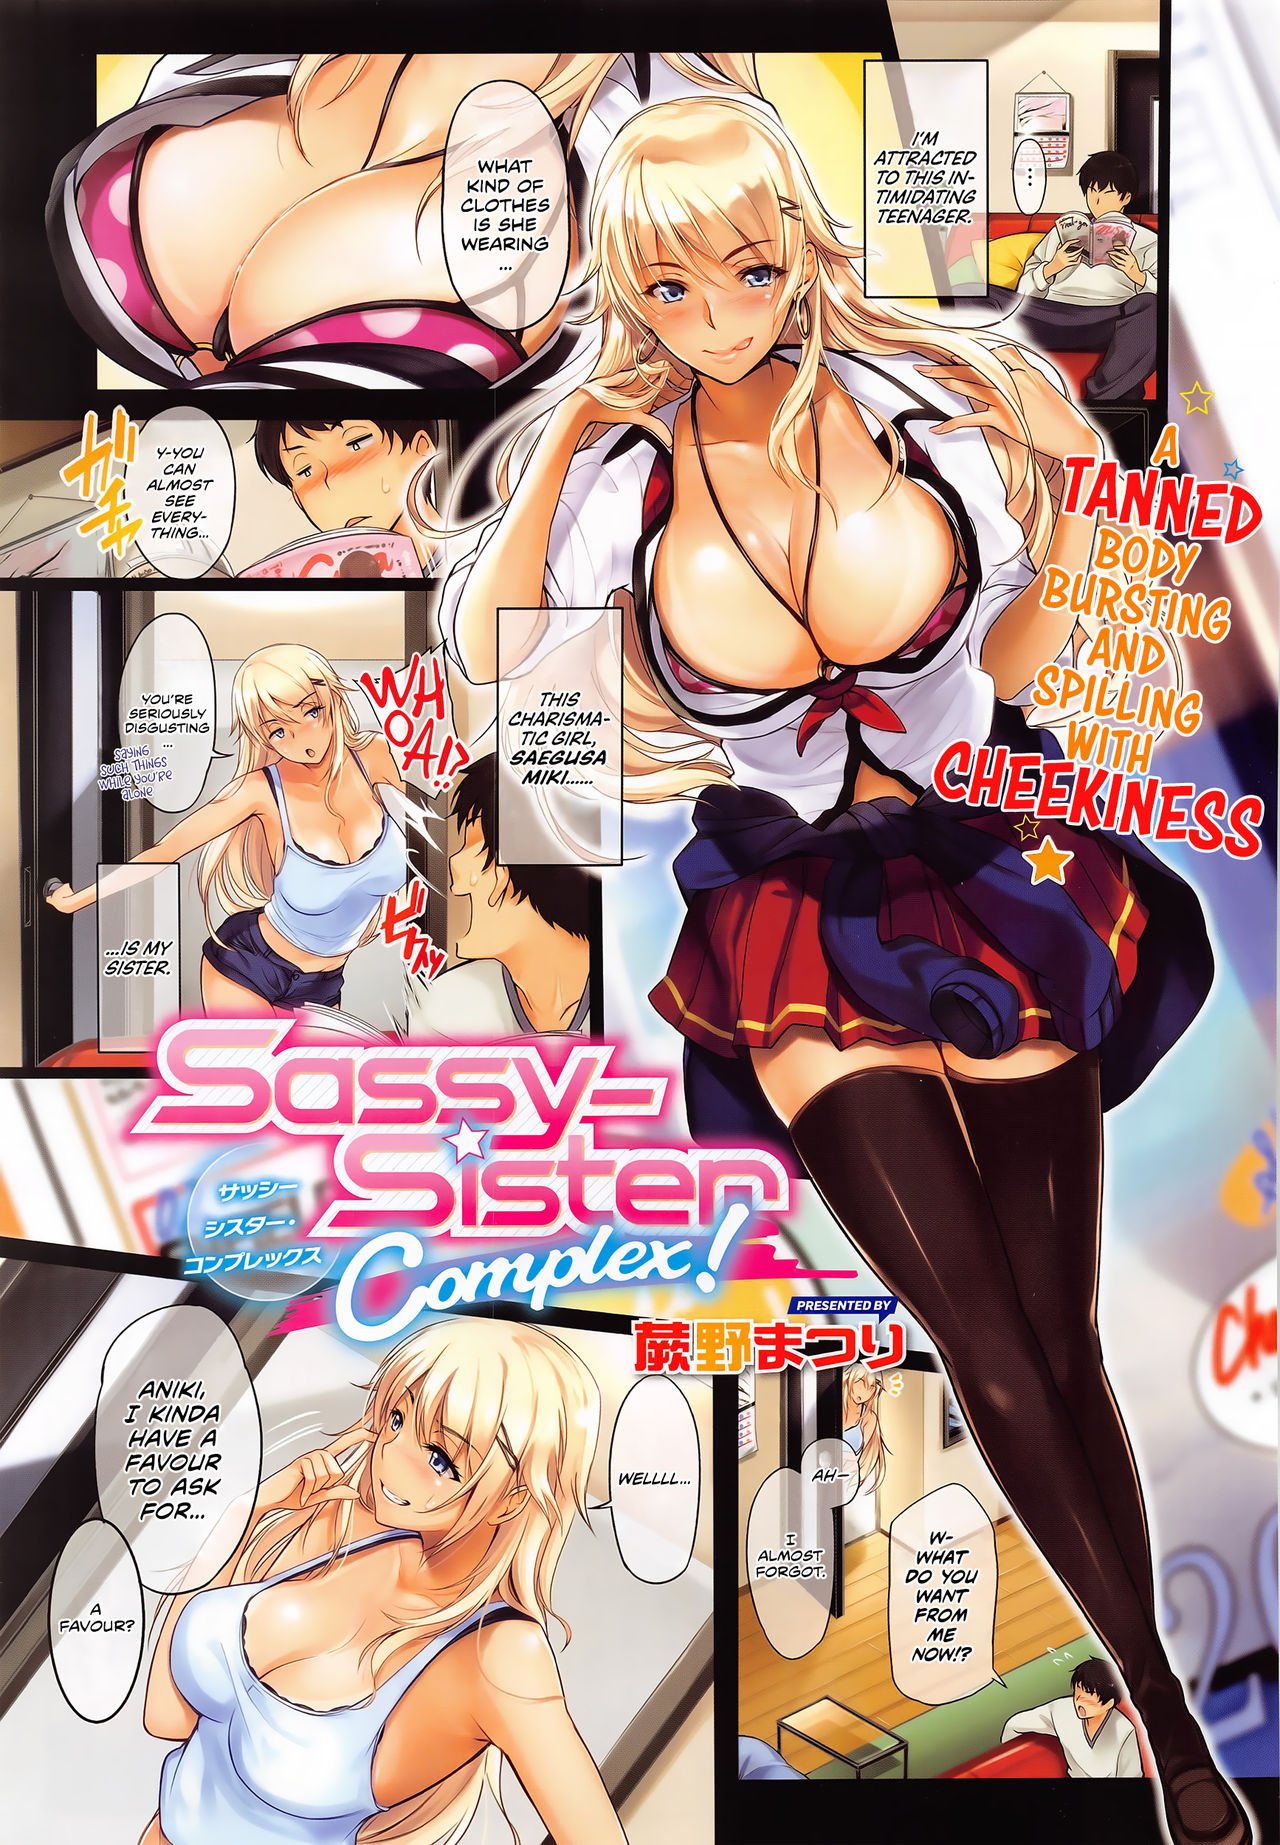 Sassy Cartoon Incest Porn - Sassy-Sister Complex! 1-4 comic porn | HD Porn Comics